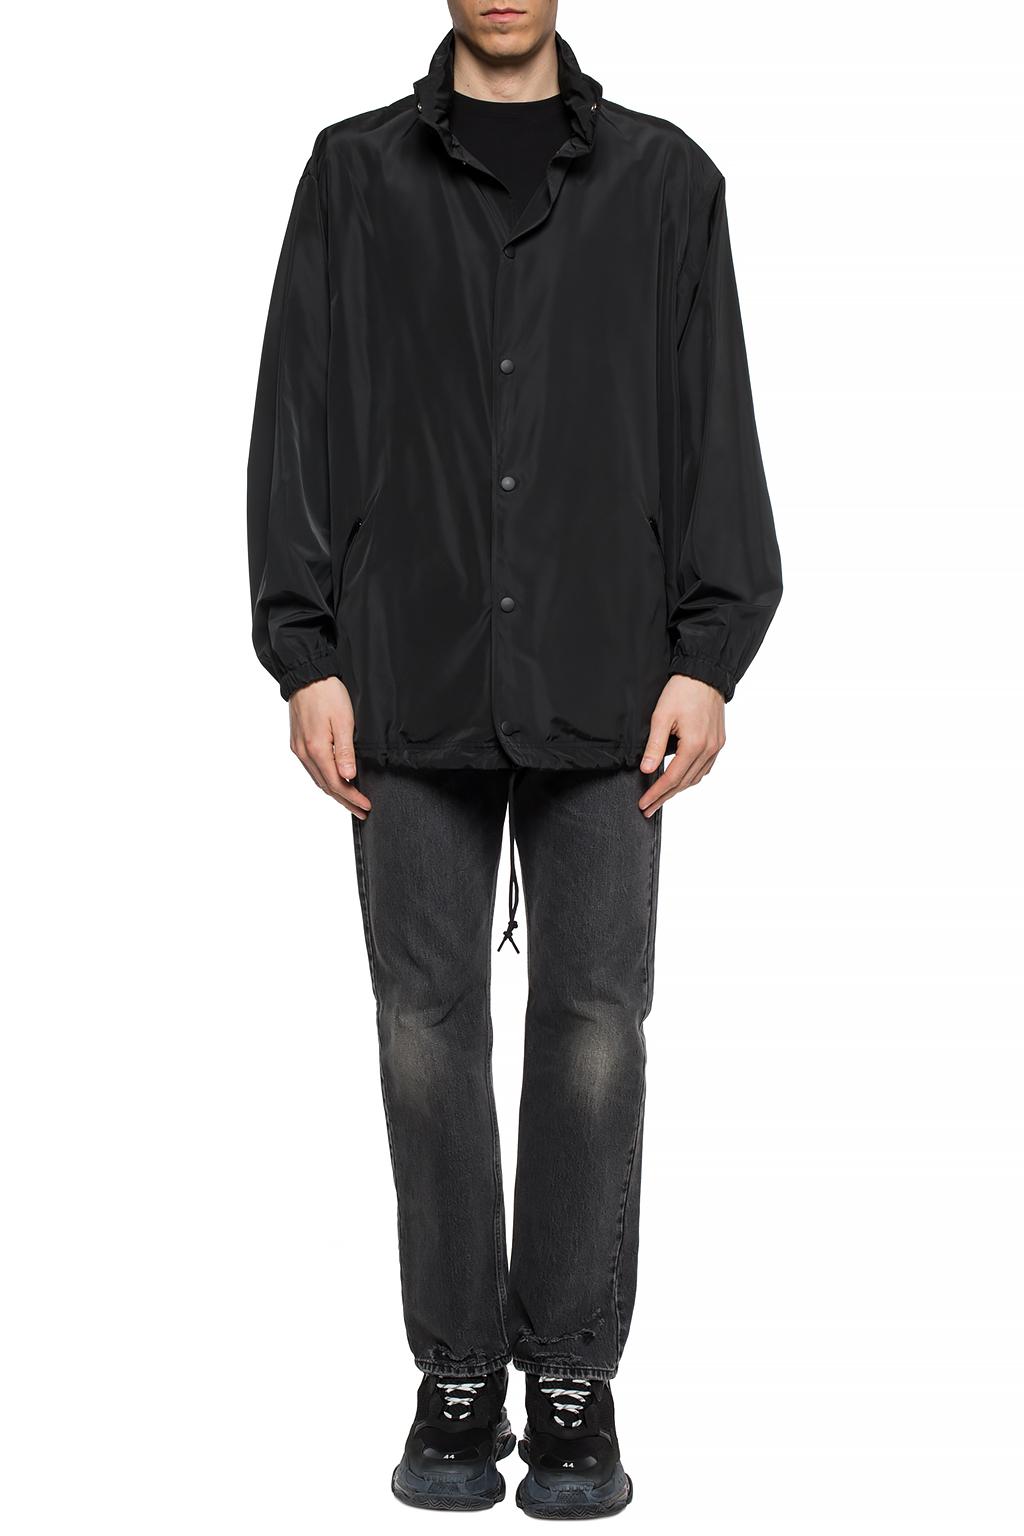 Oversize' rain jacket Balenciaga - Vitkac Singapore